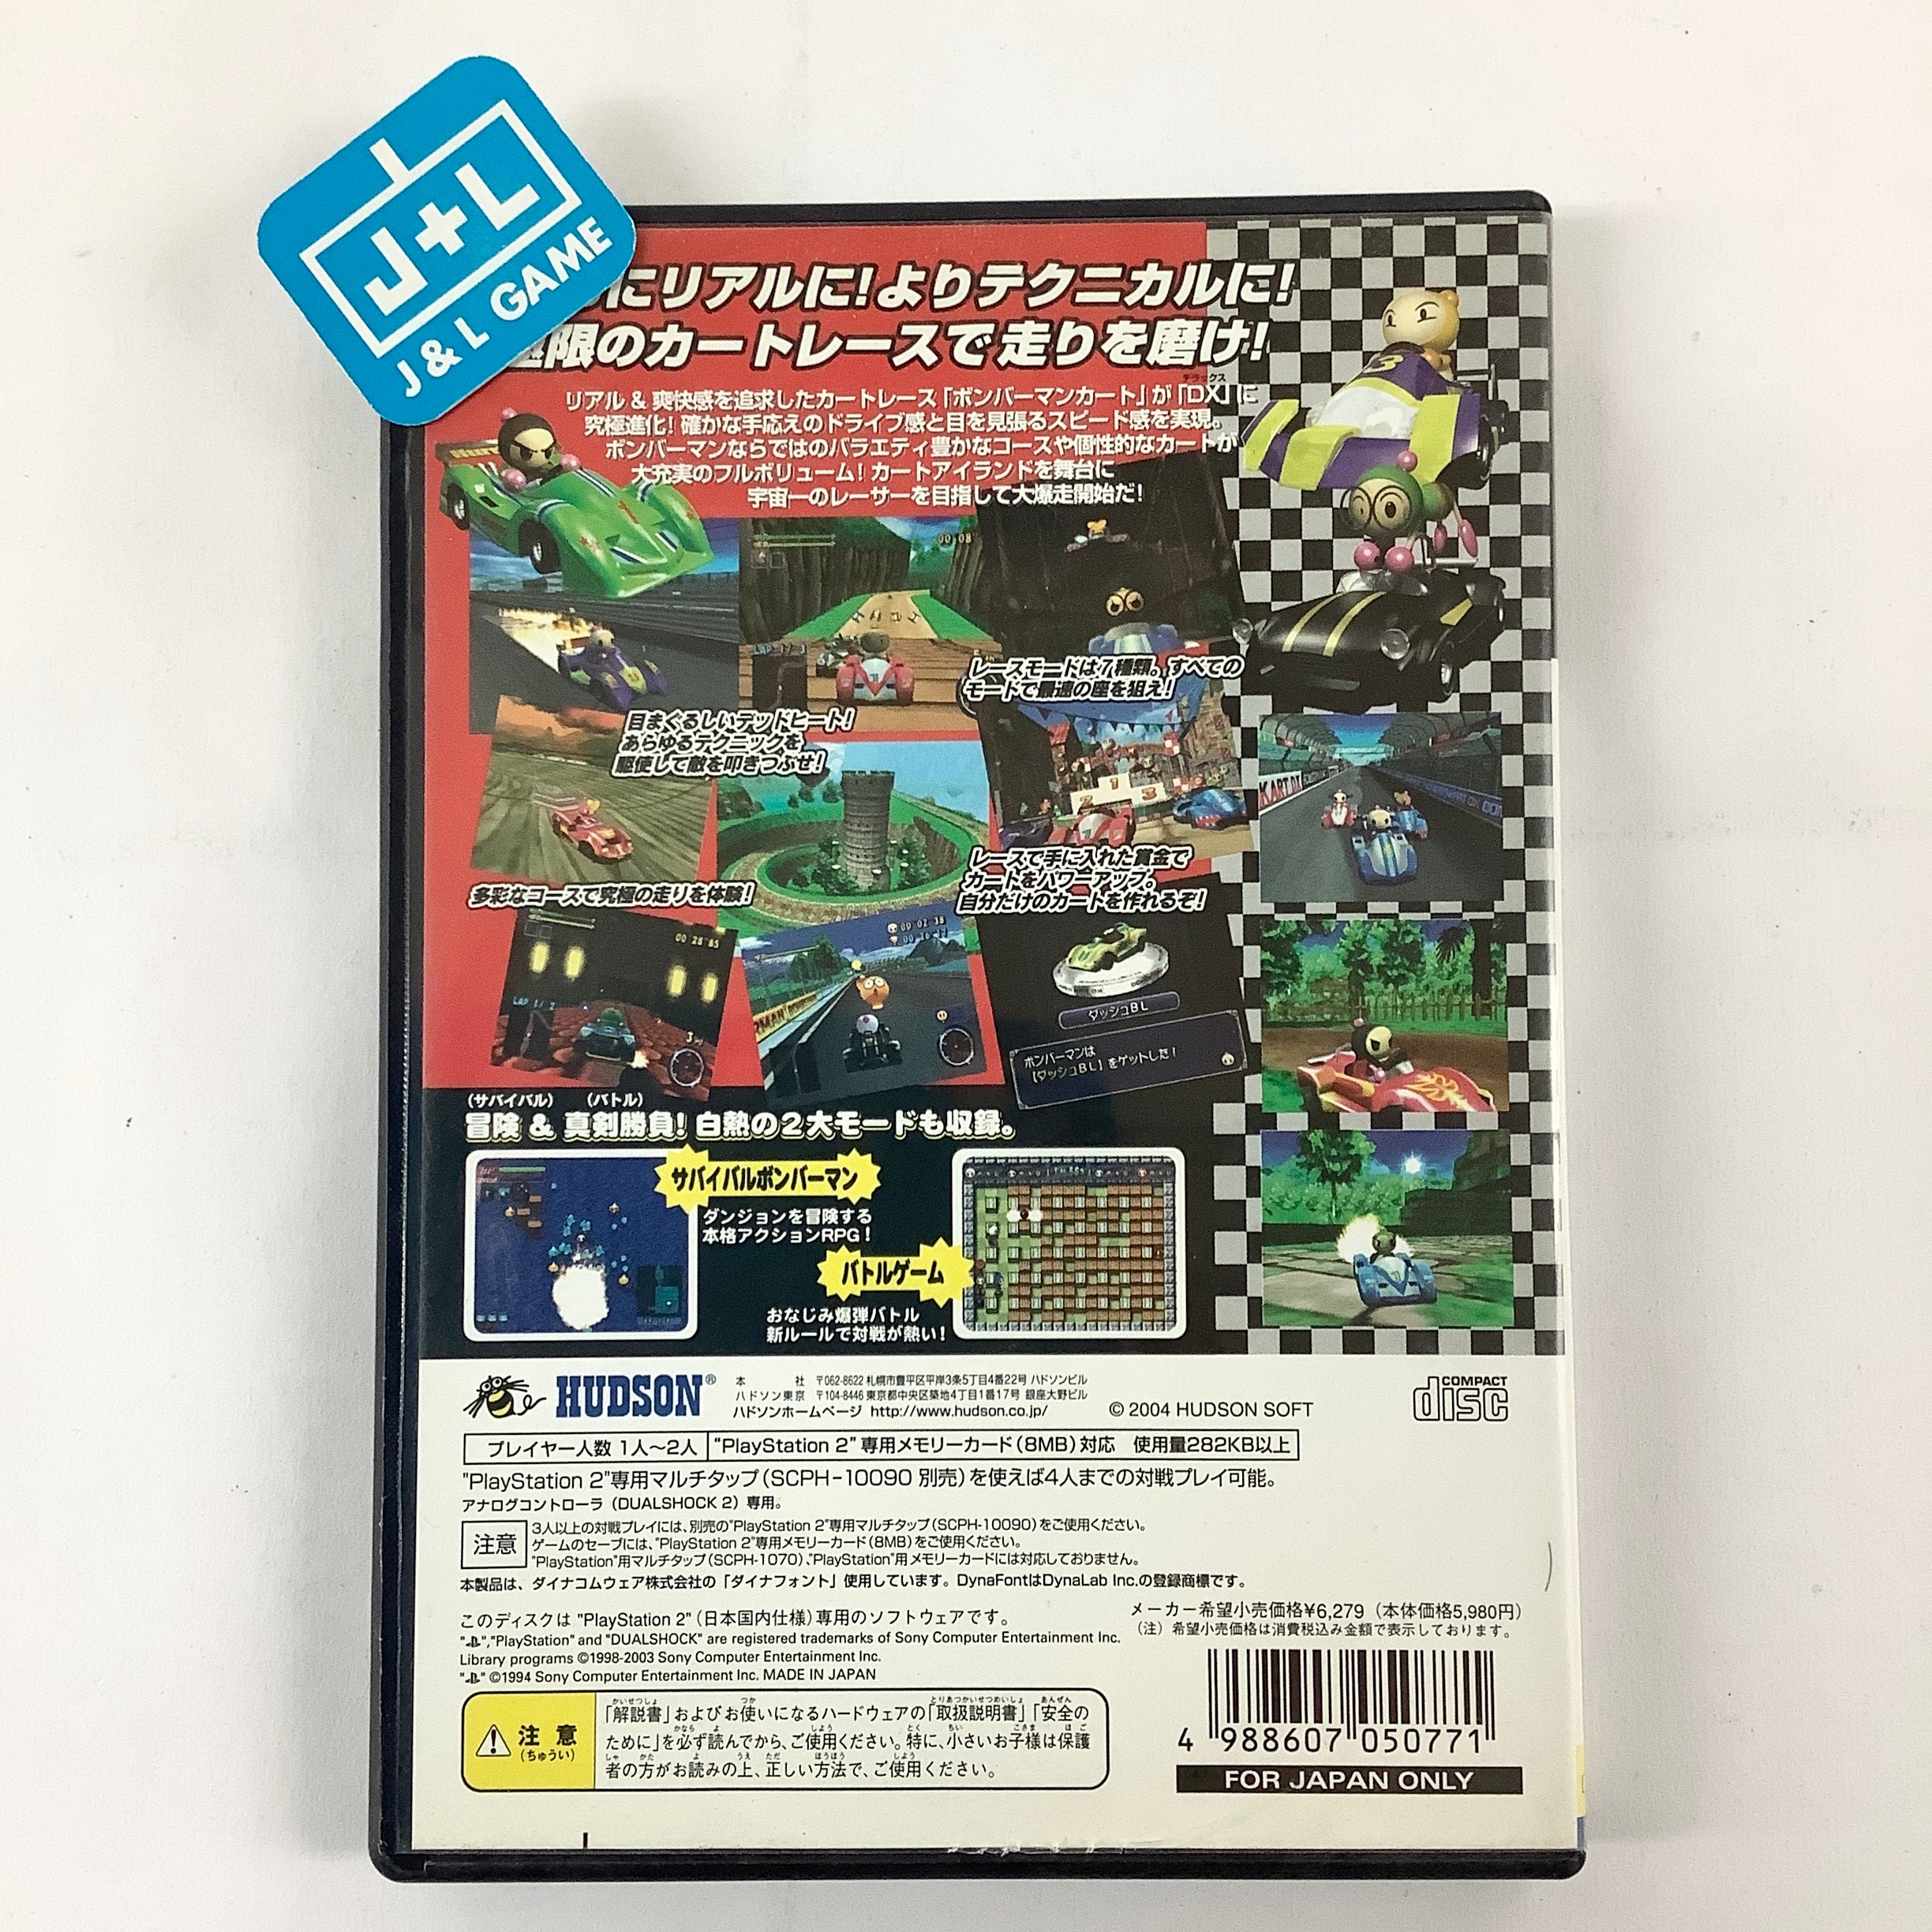 Bomberman Kart DX - (PS2) PlayStation 2 [Pre-Owned] (Japanese Import) Video Games Hudson   